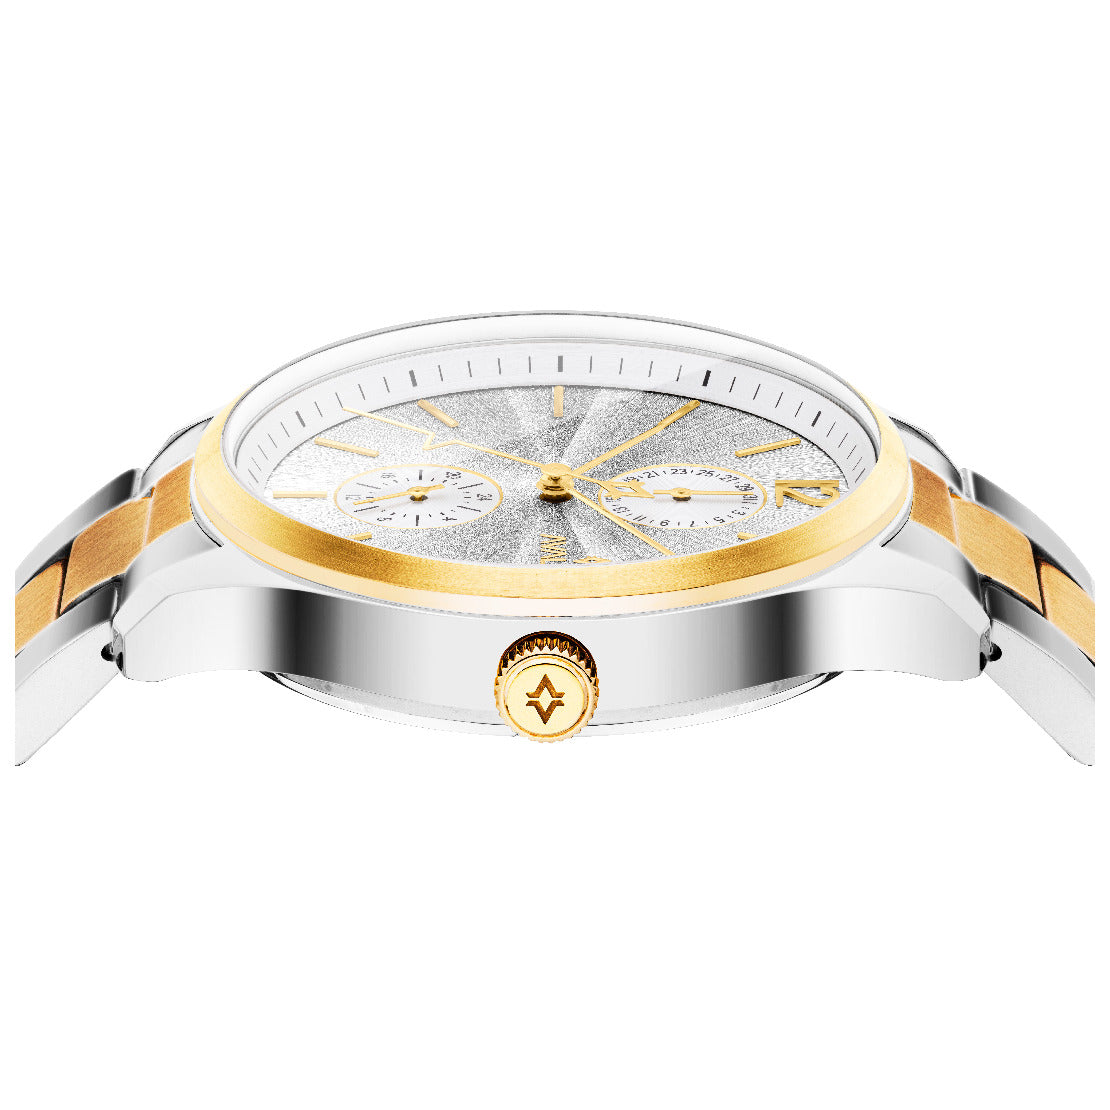 Avalieri Men's Quartz Watch With Silver White Dial - AV-2476B